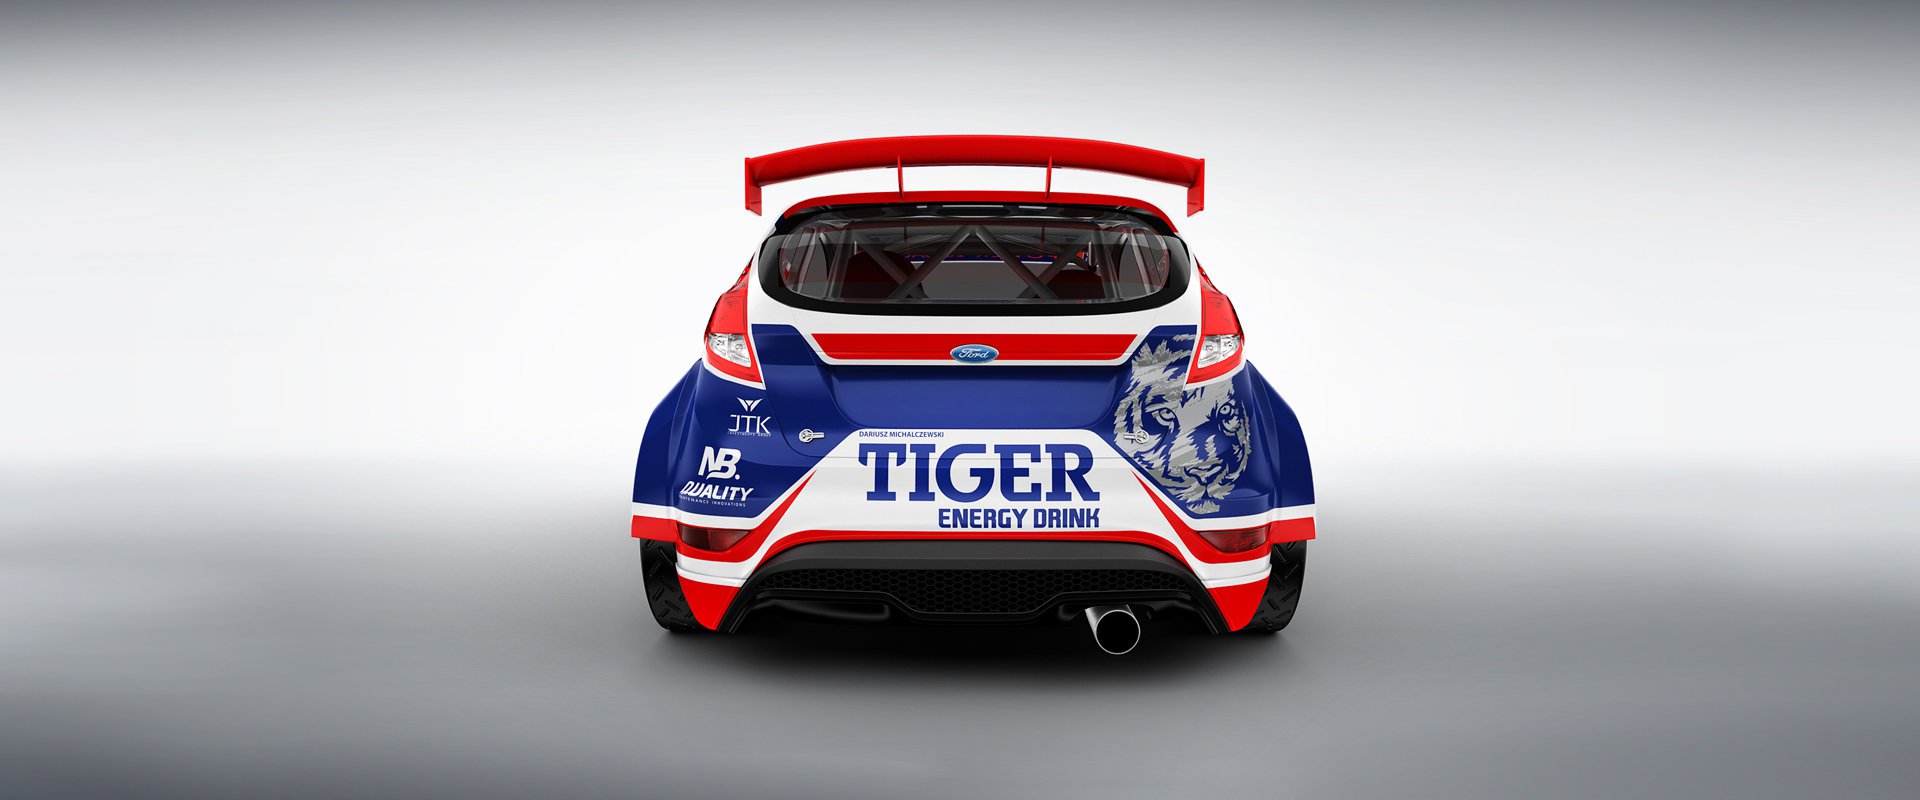 Tiger Rally Team #3